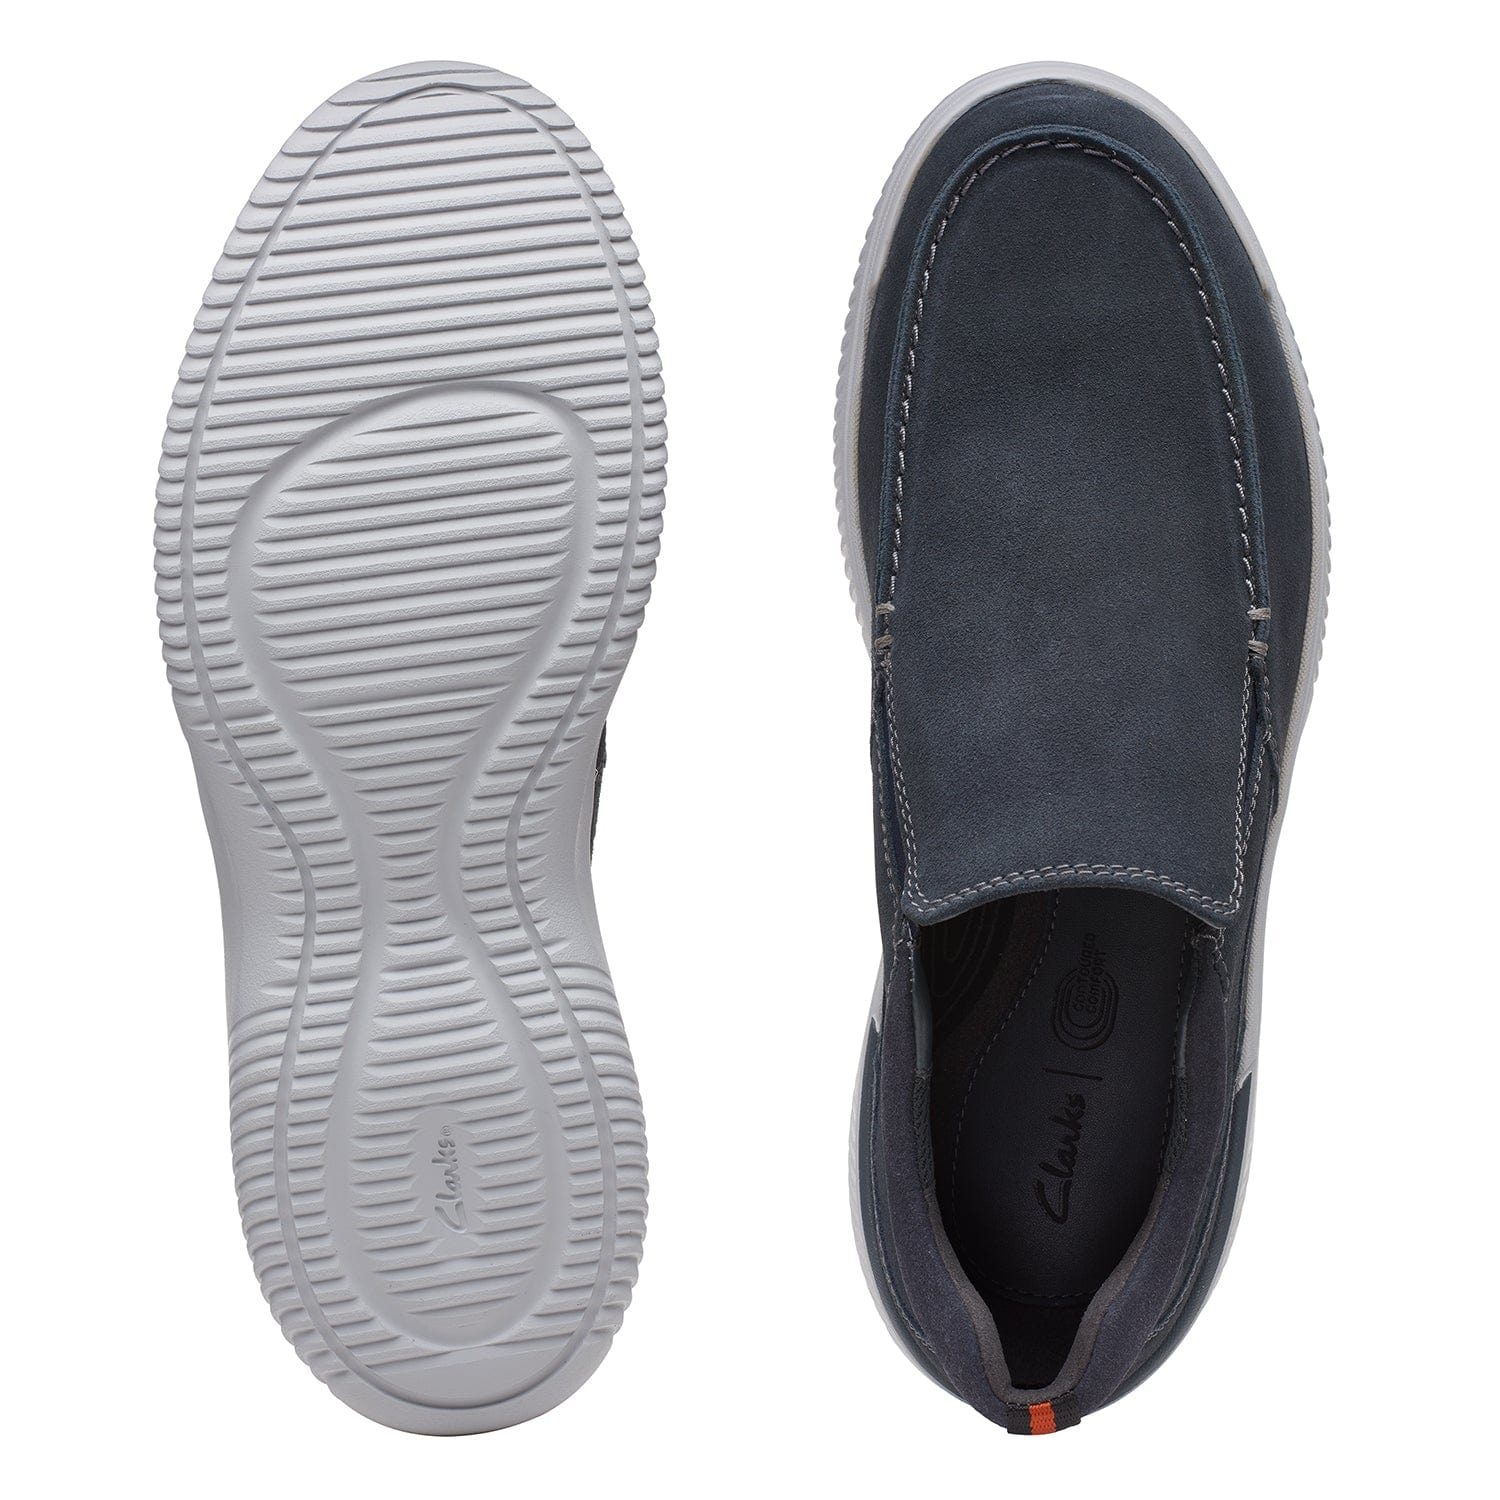 Clarks Donaway Free - Shoes - Navy Waxy - 261659857 - G Width (Standard Fit)